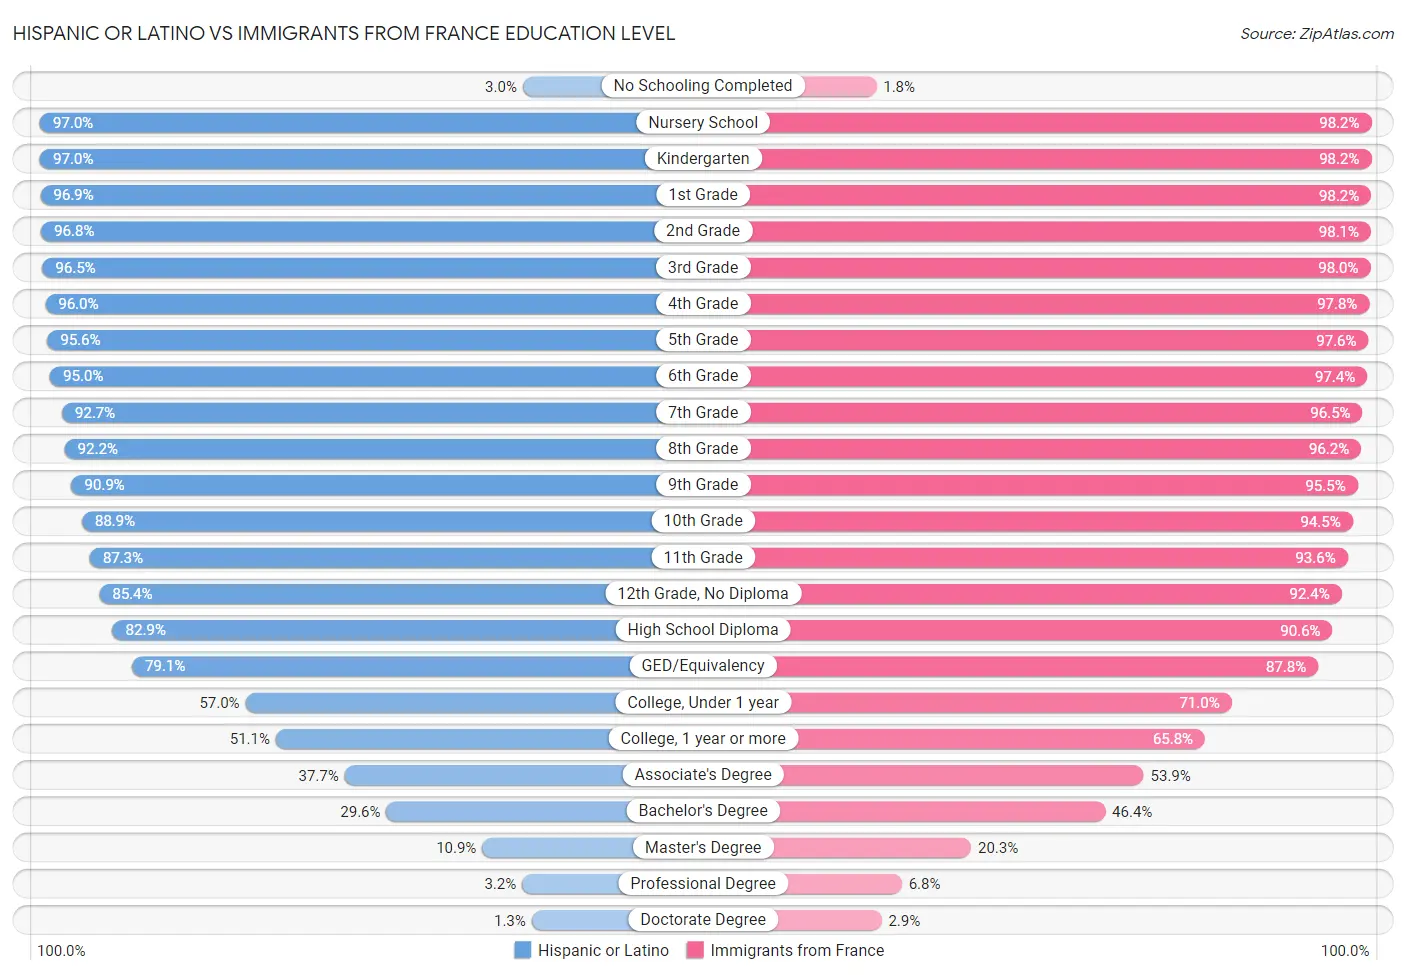 Hispanic or Latino vs Immigrants from France Education Level